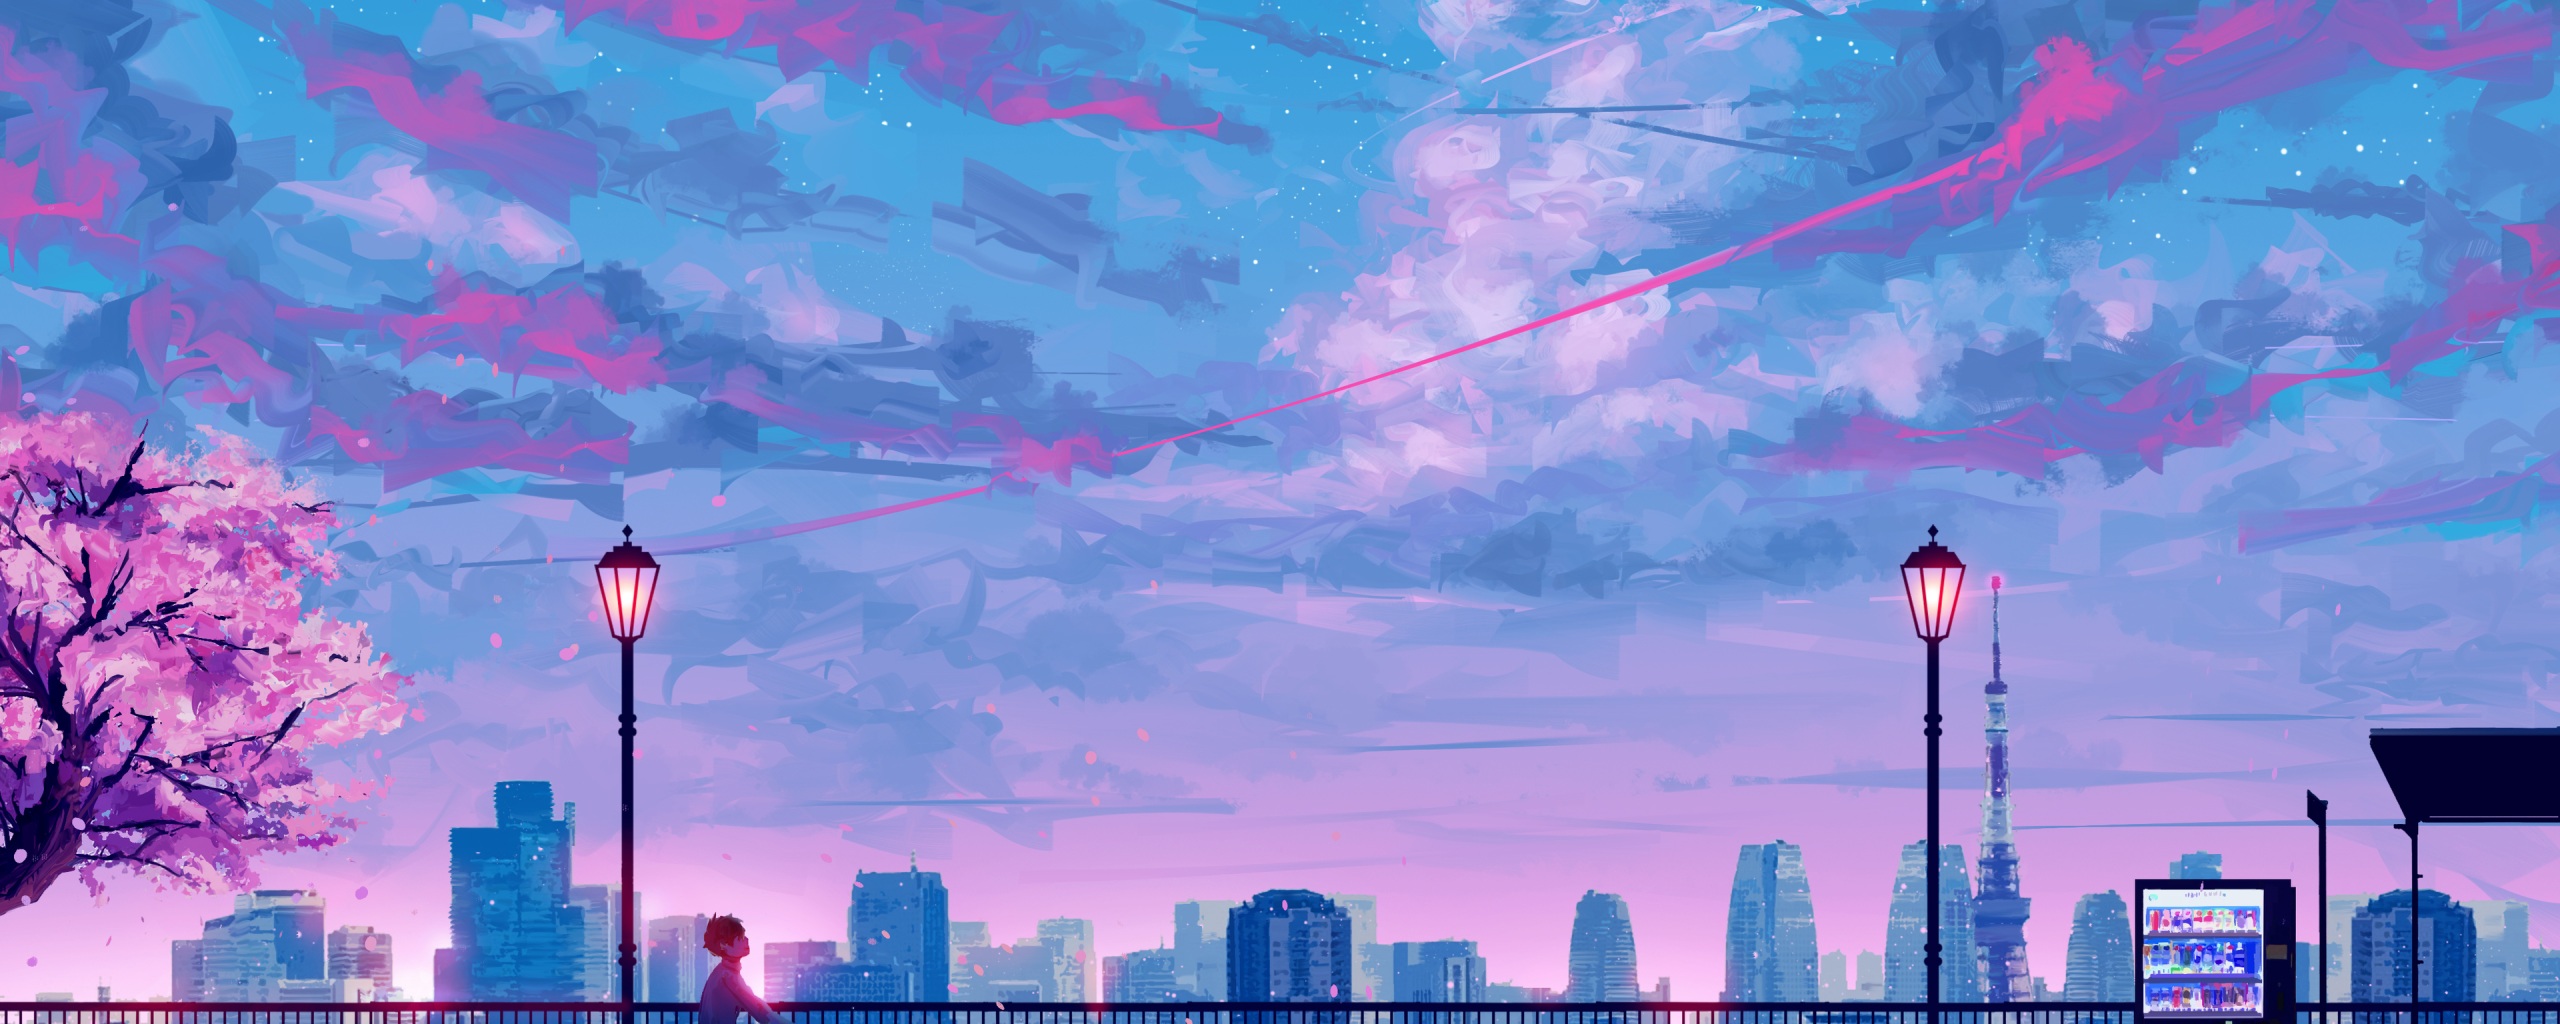 Wallpaper 4k Anime Cityscape Landscape Scenery 4k 4k Wallpapers